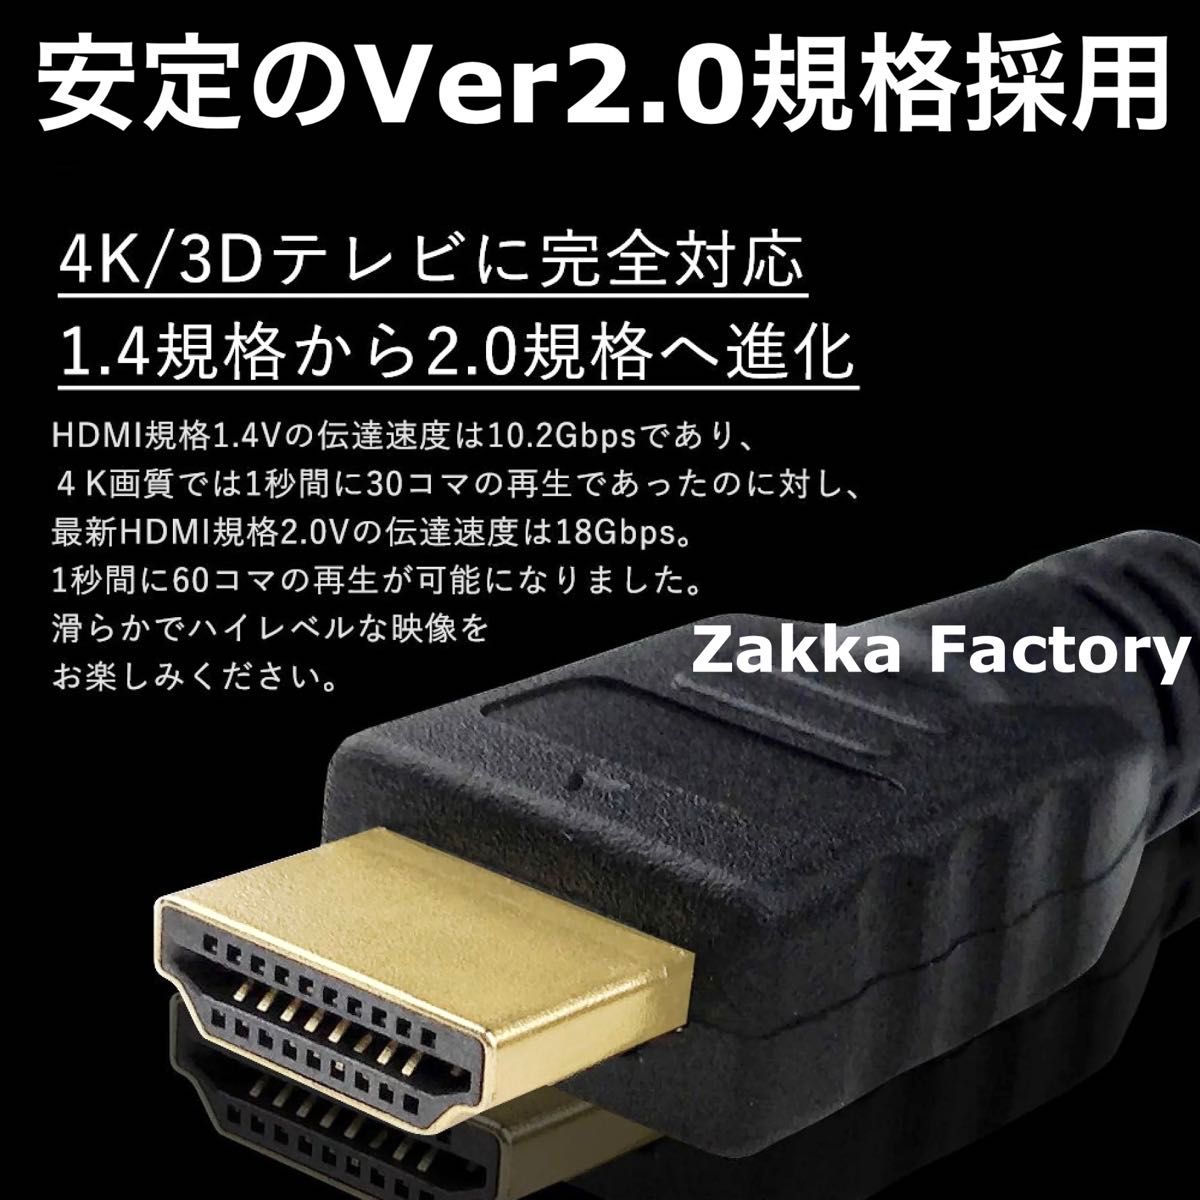 3m 4K HDMIケーブル 高品質Ver2.0 プレミアムハイスピード スイッチ ゲーム プロジェクター テレビ 接続 